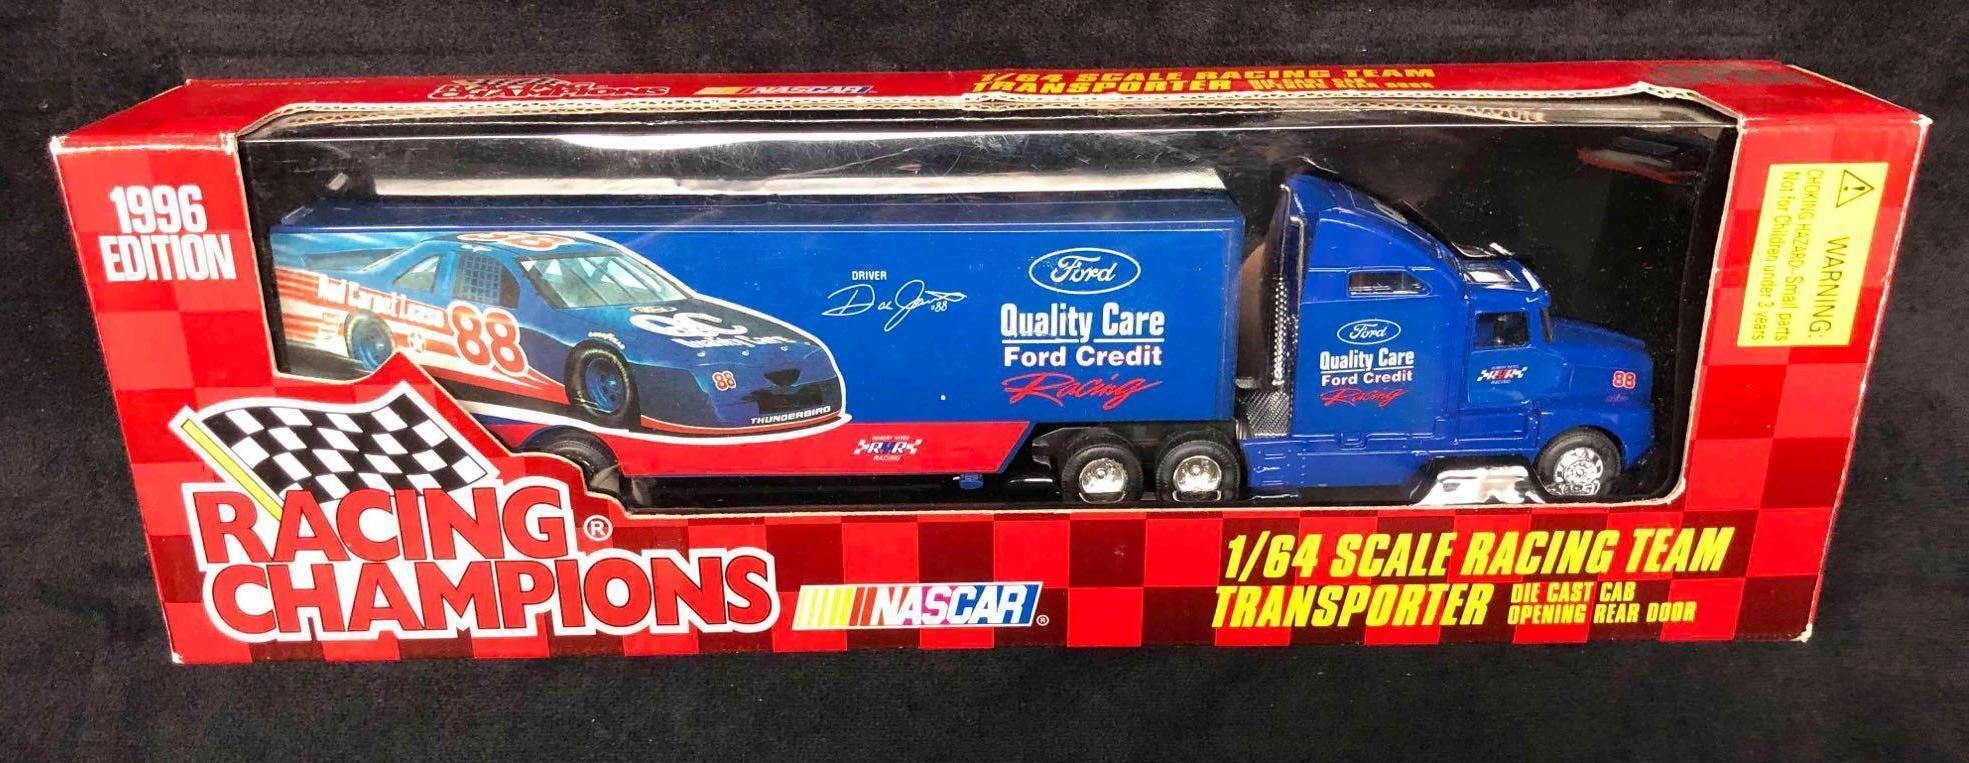 #88 Dale Jarrett Racing Champions NASCAR 1996 Ford